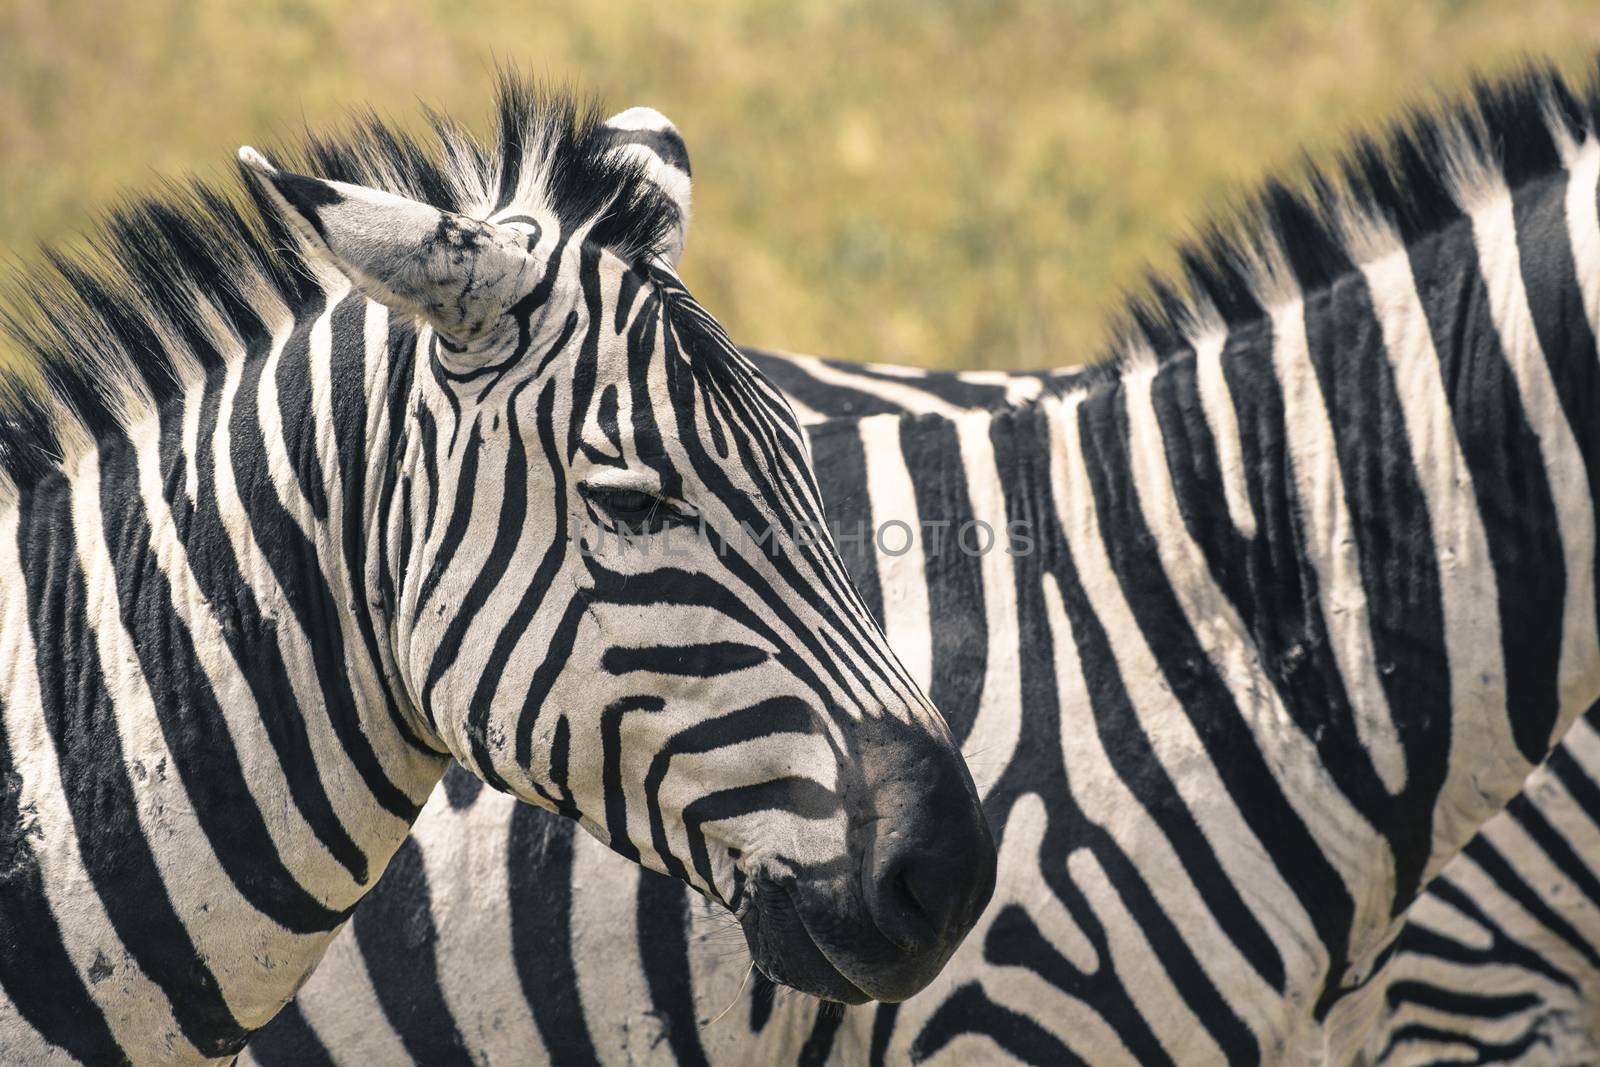 Zebra in National Park. Africa, Kenya